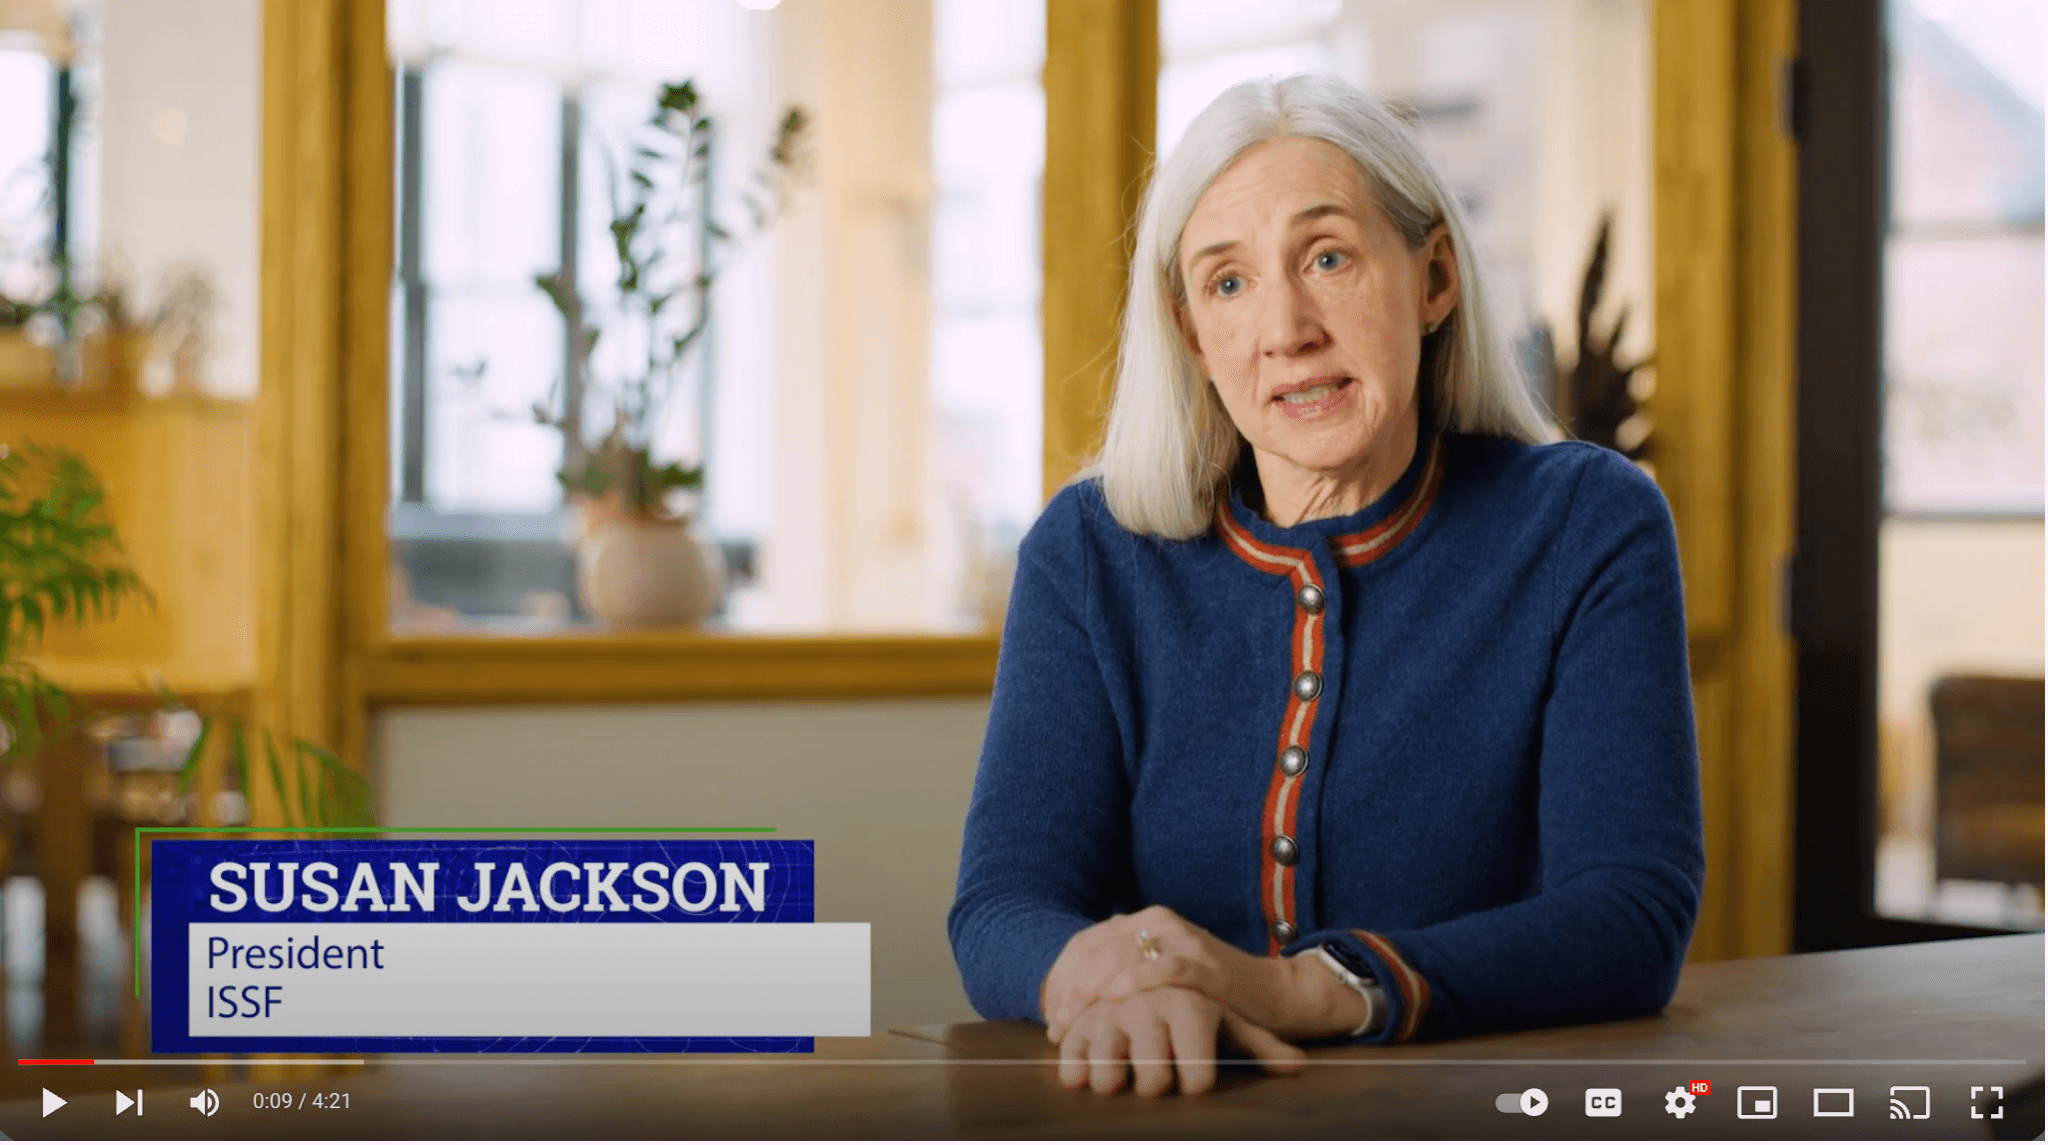 Susan Jackson video image